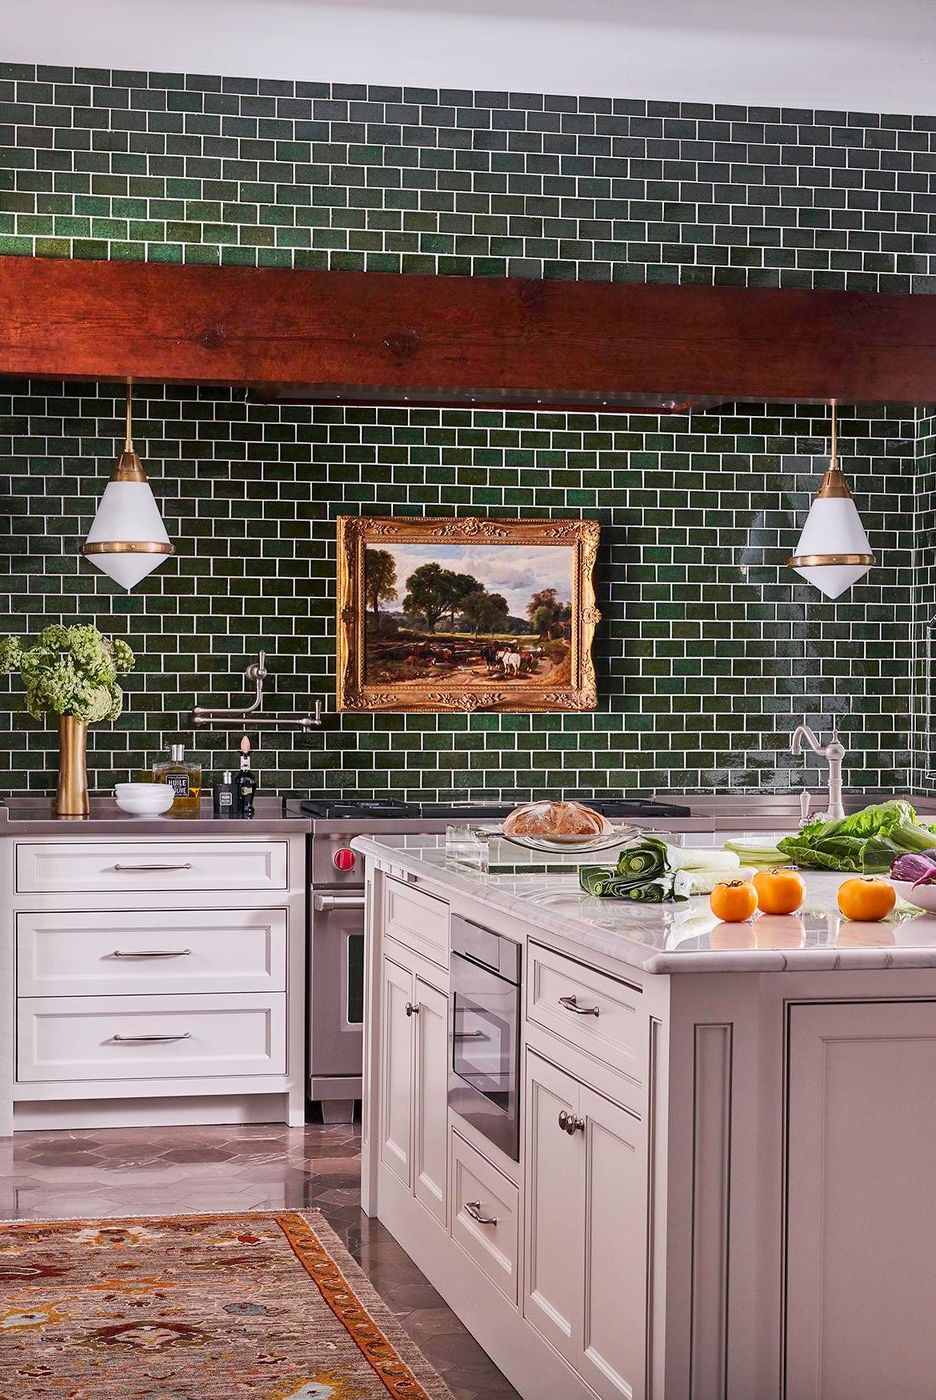 7 Ways to Style Vintage Rugs  Hardwood floors in kitchen, Home decor  kitchen, Home kitchens